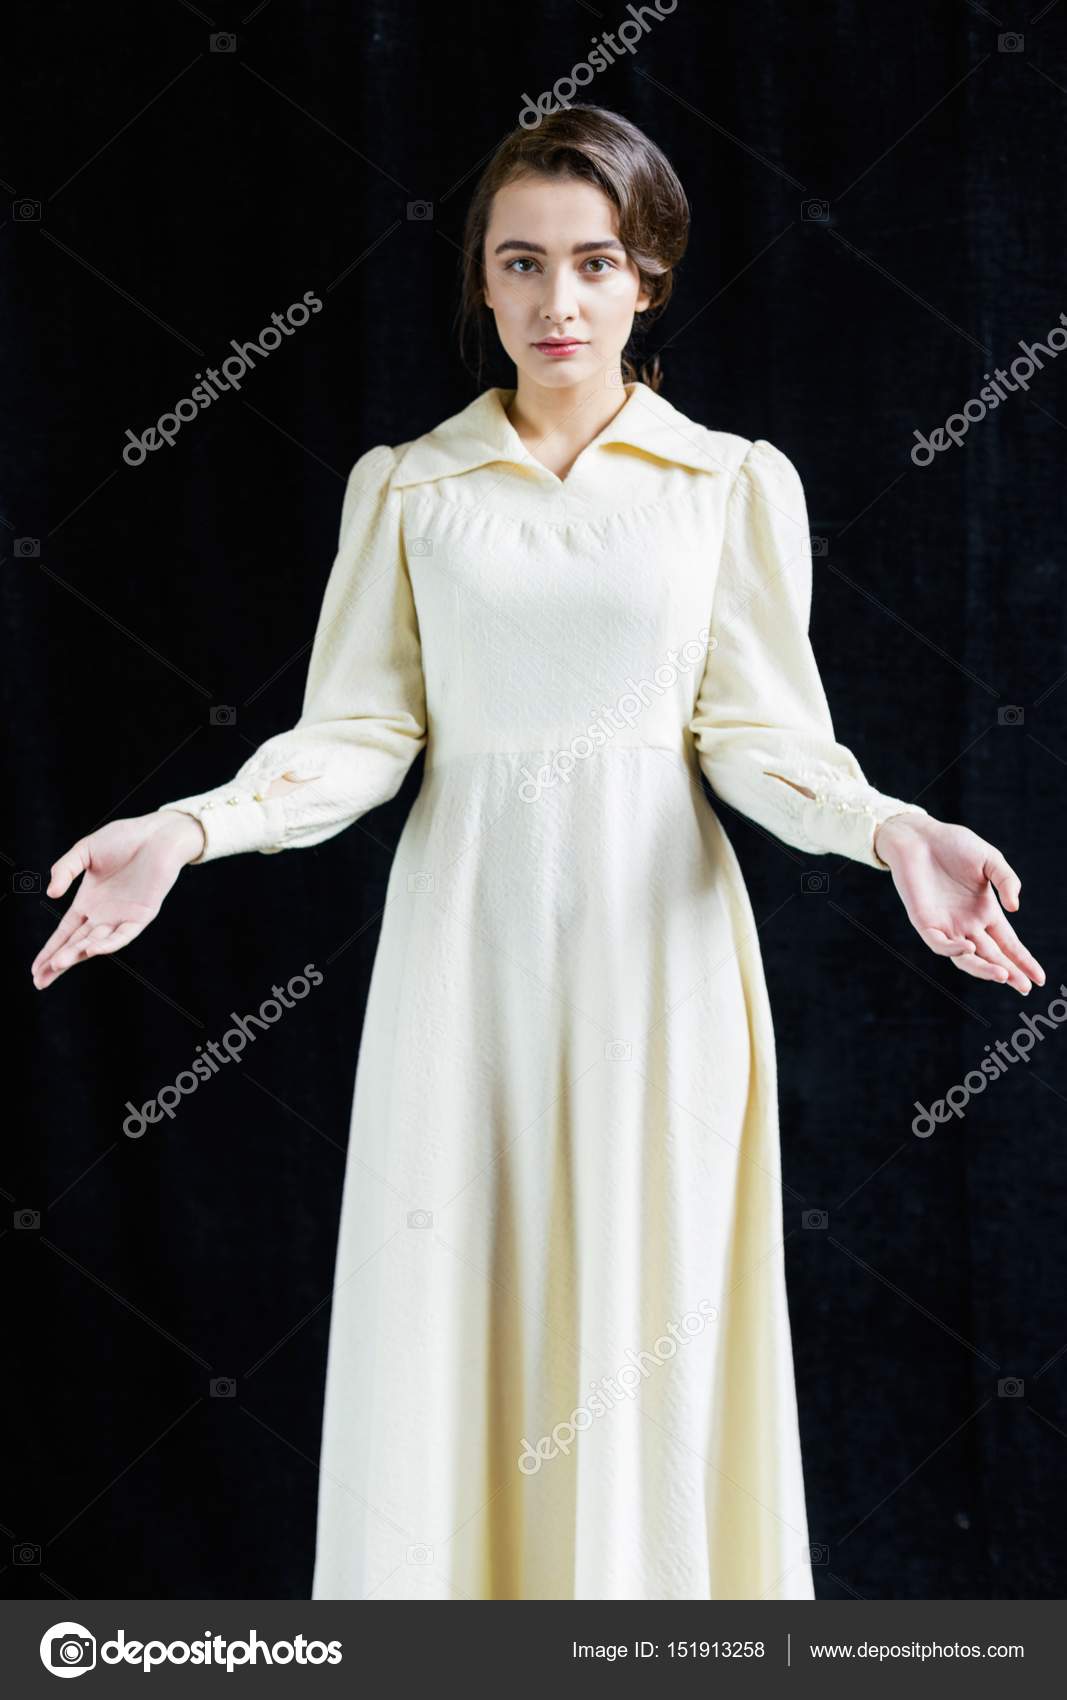 Kvinne i gammeldags kjole – stockfoto © smmartynenko #151913258